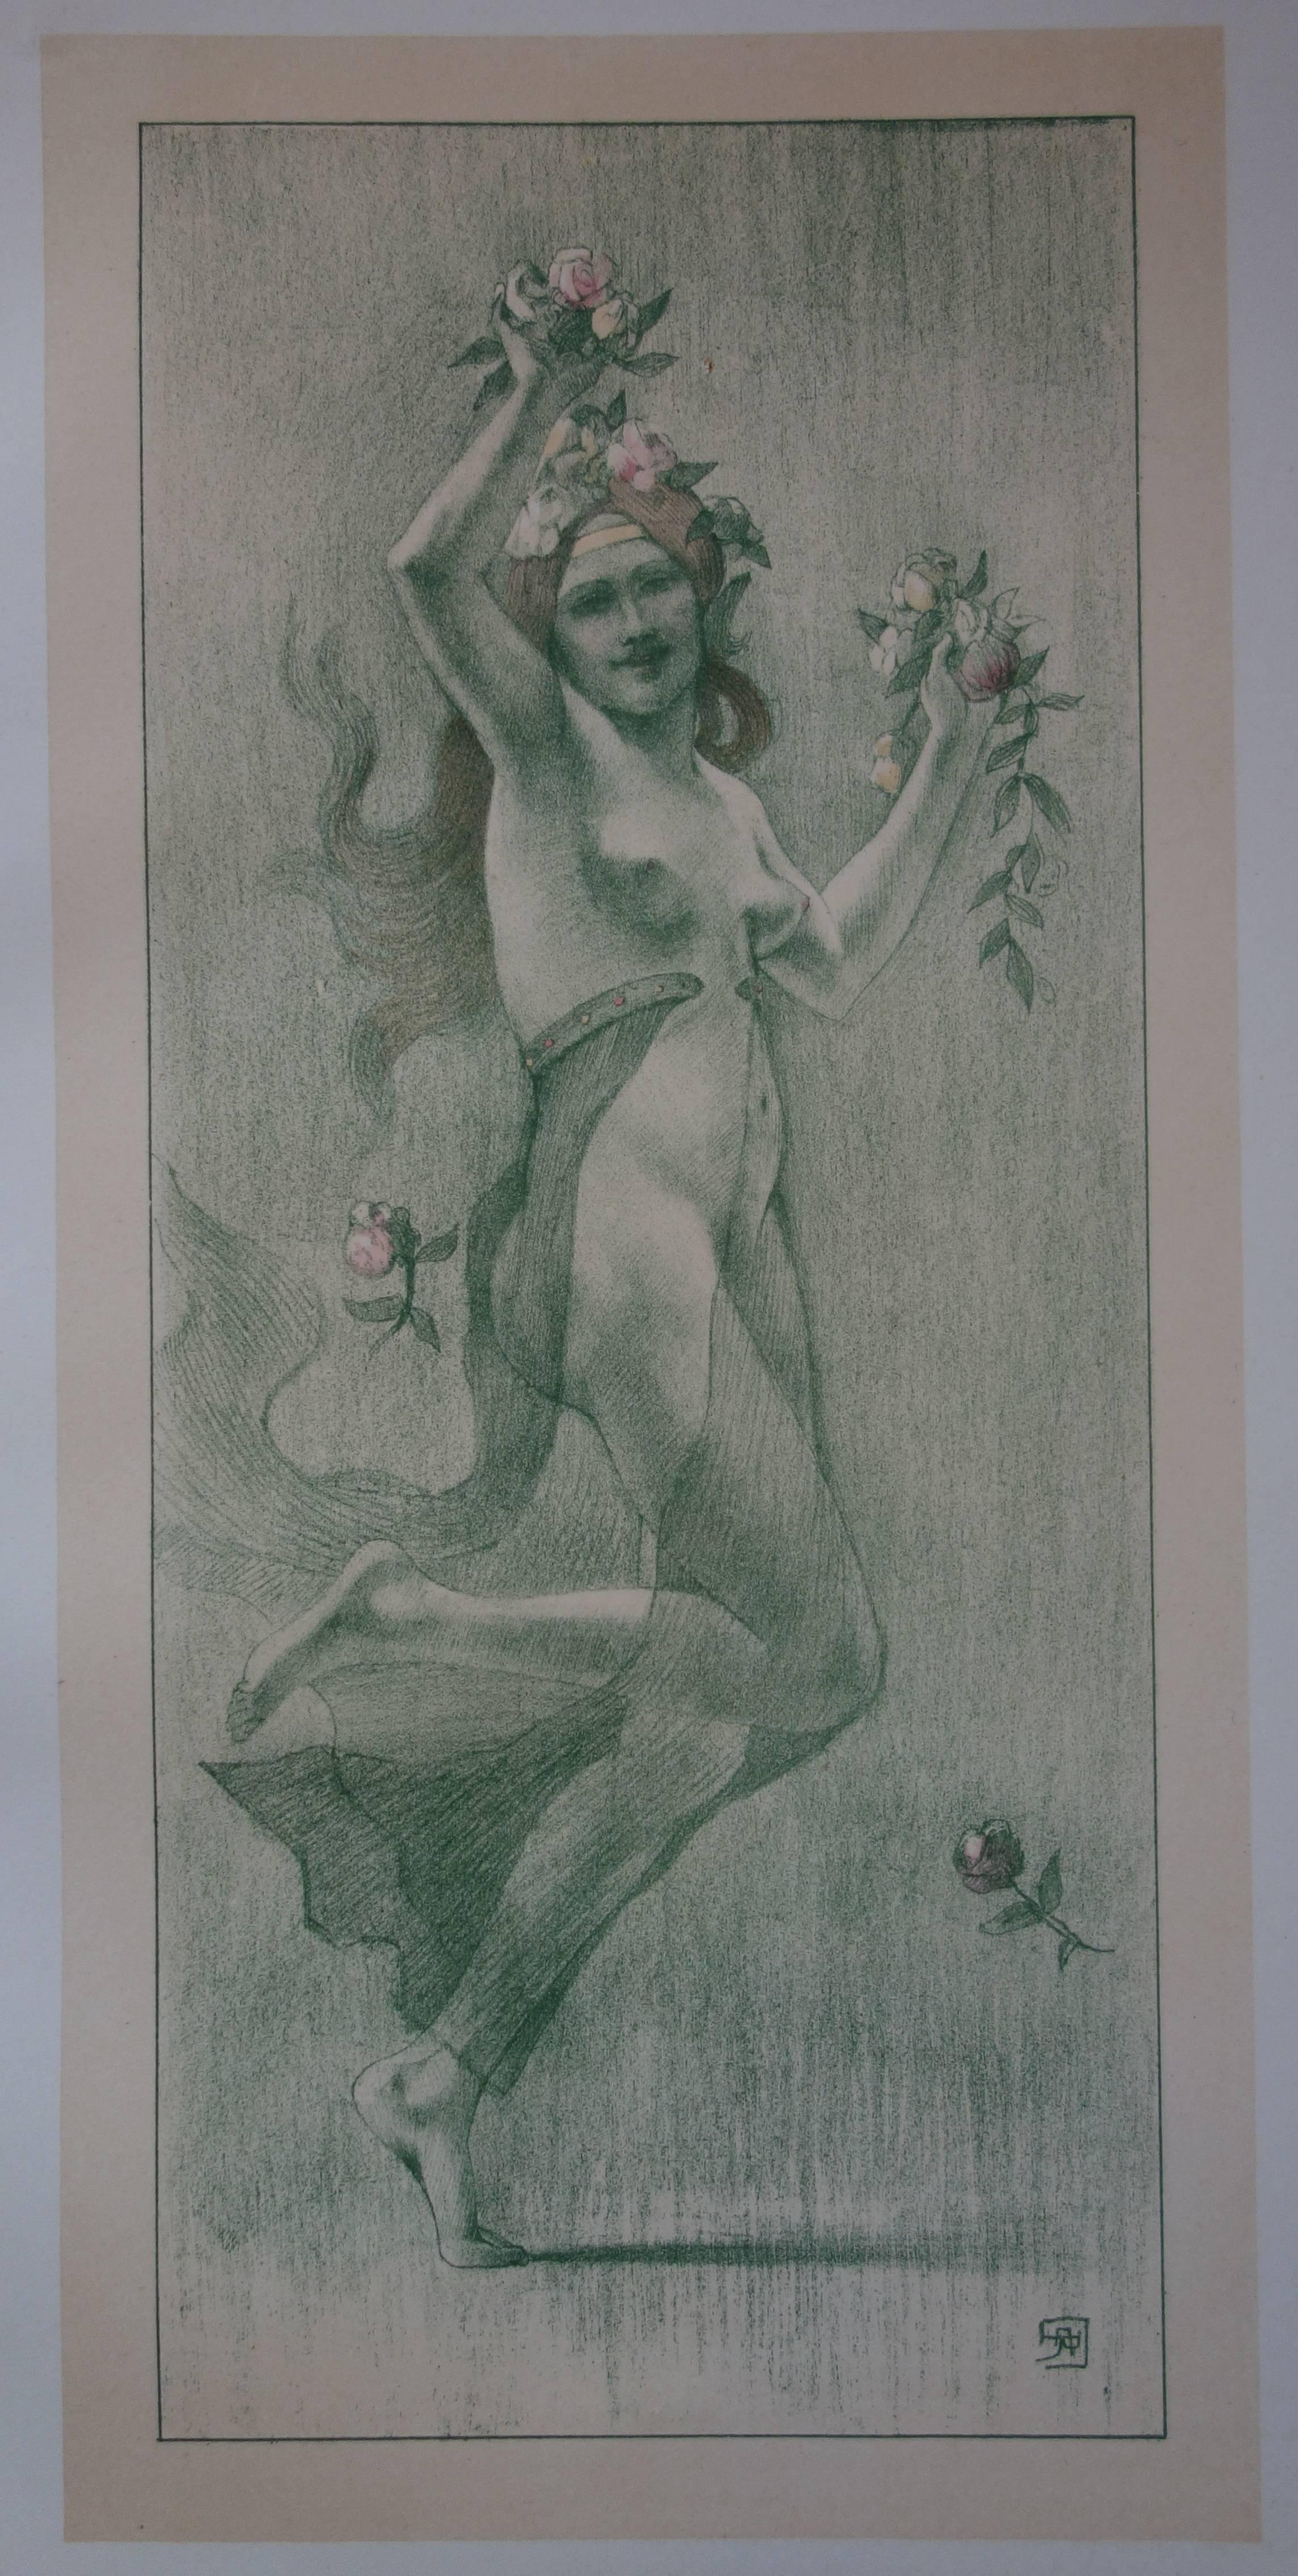 Armand Rassenfosse Figurative Print - The Dance - Original lithograph - 1897